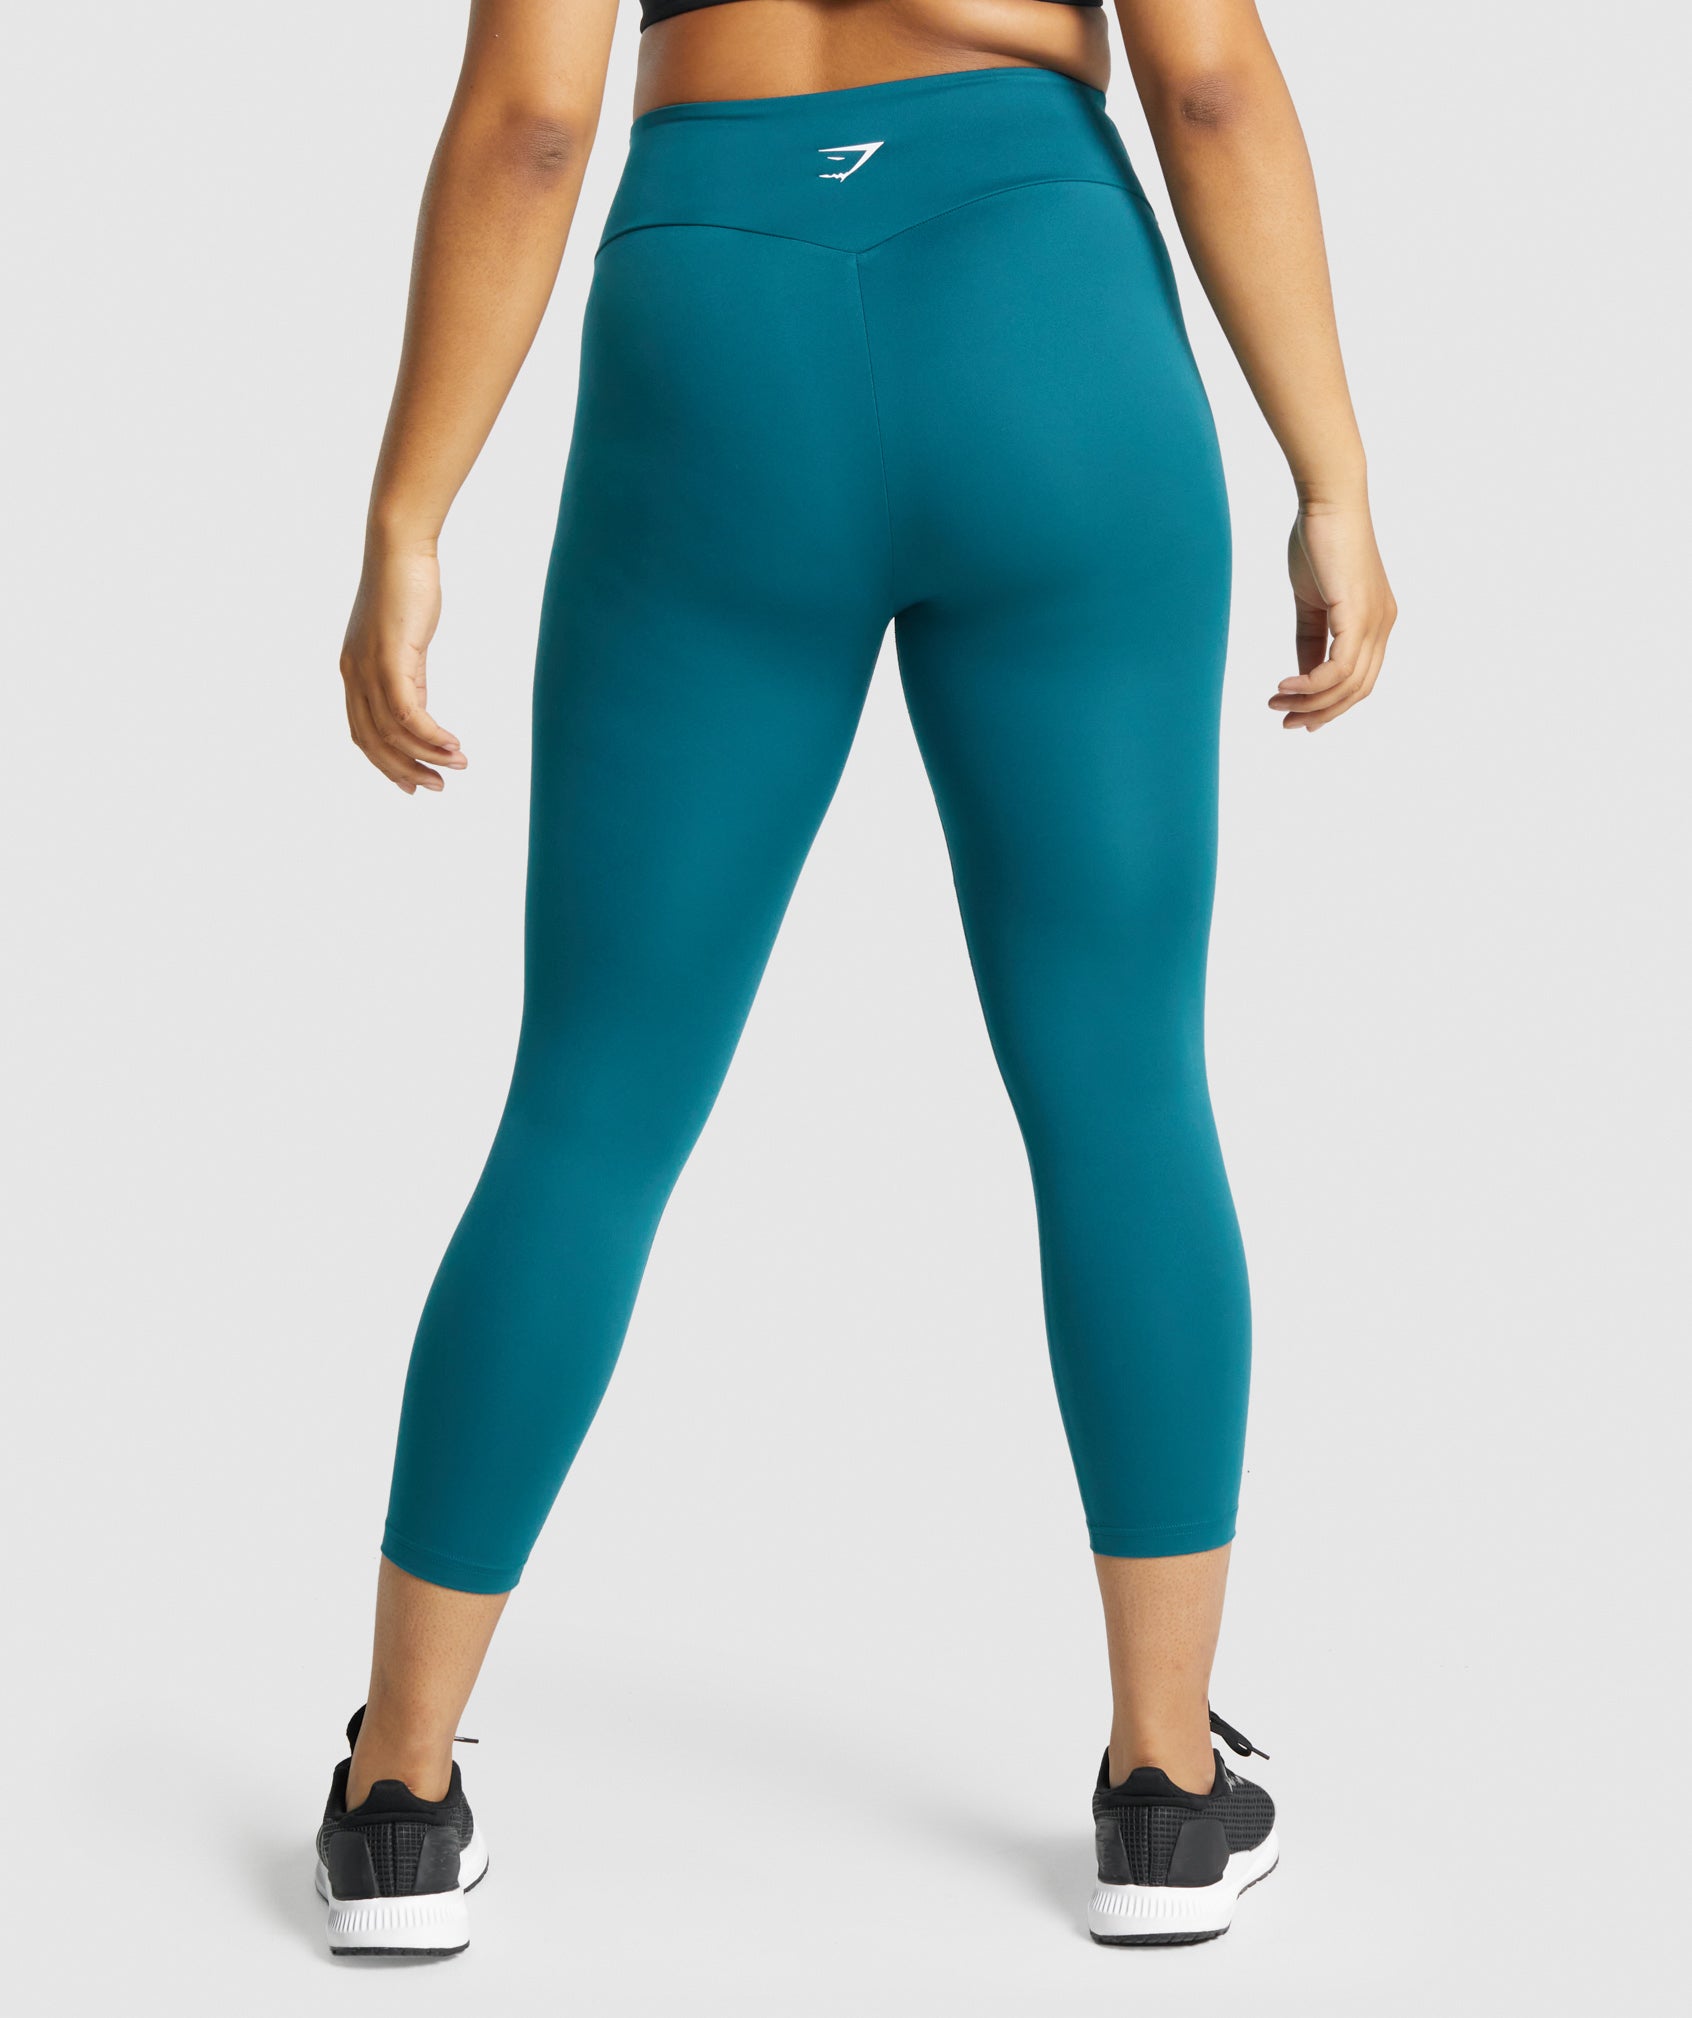 HSMQHJWE Petite Yoga Pants For Women Petite Length Workout